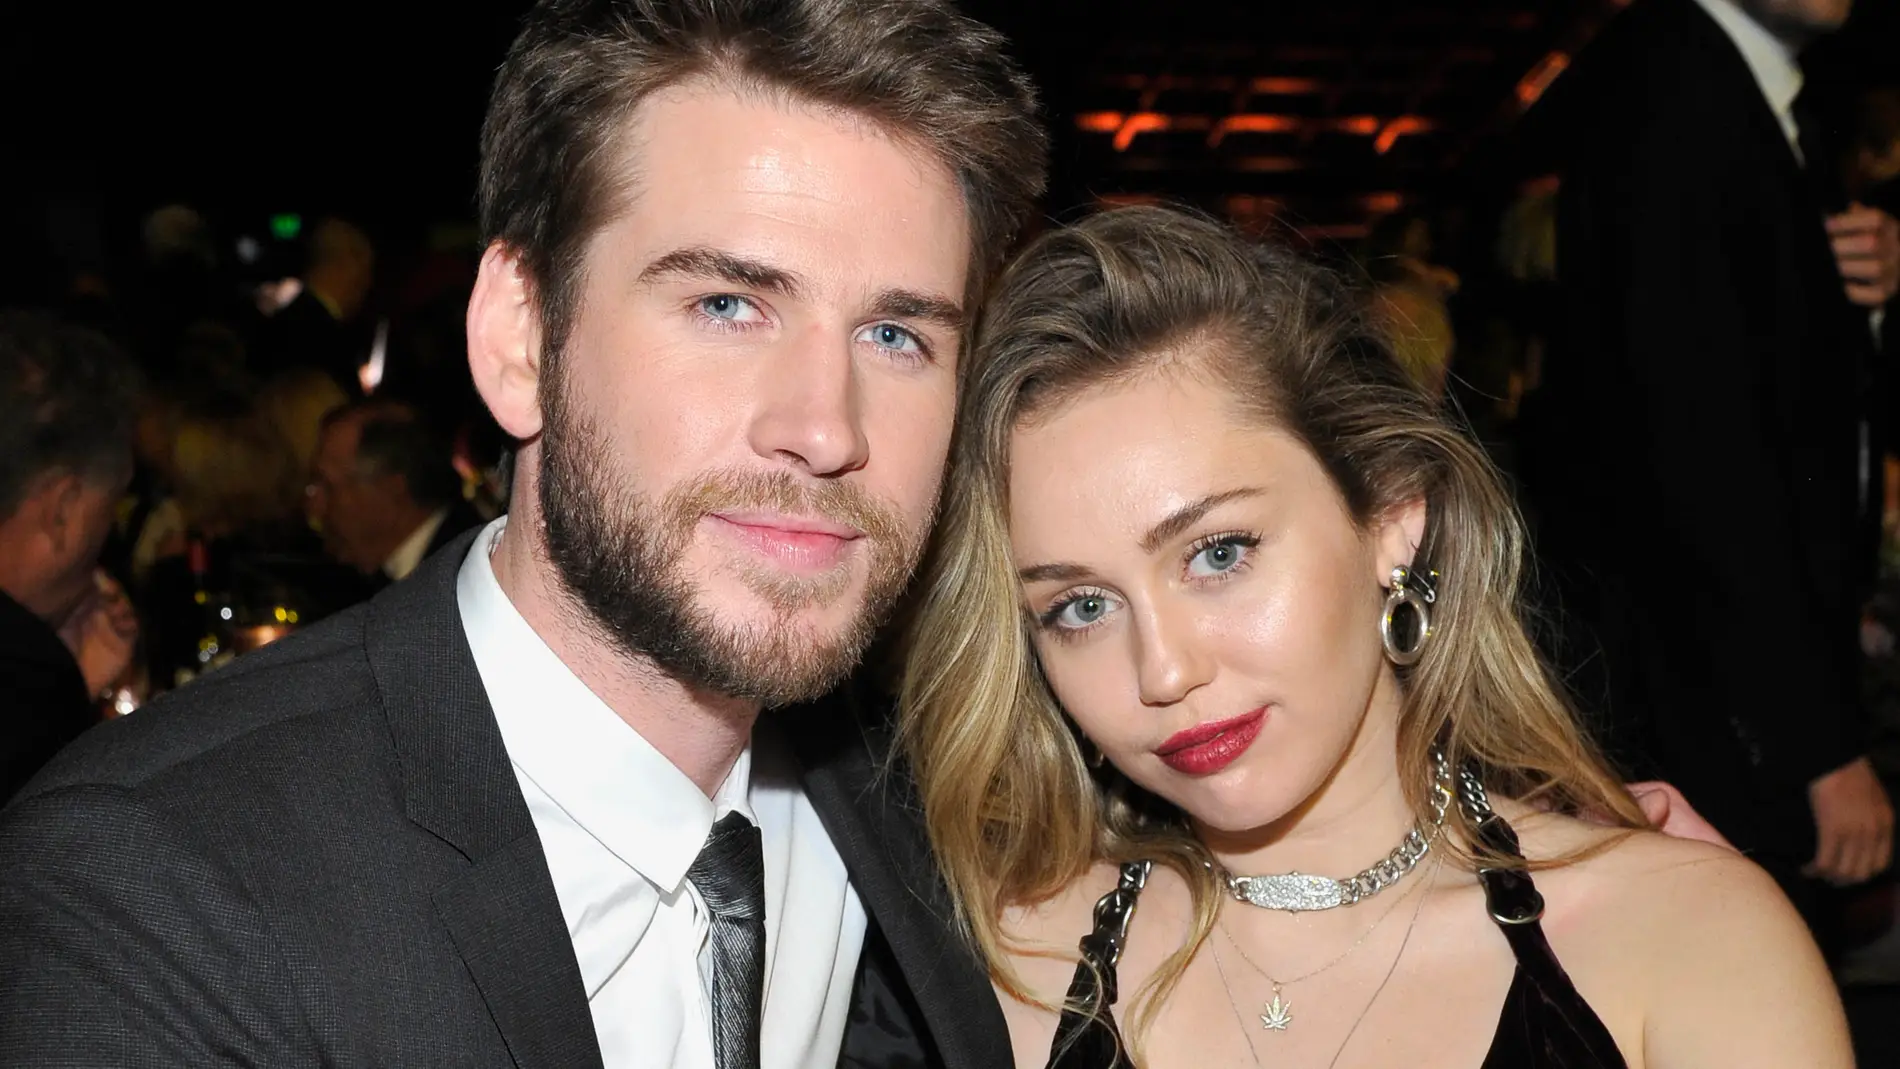 Miley Cyrus y Liam Hemsworth 